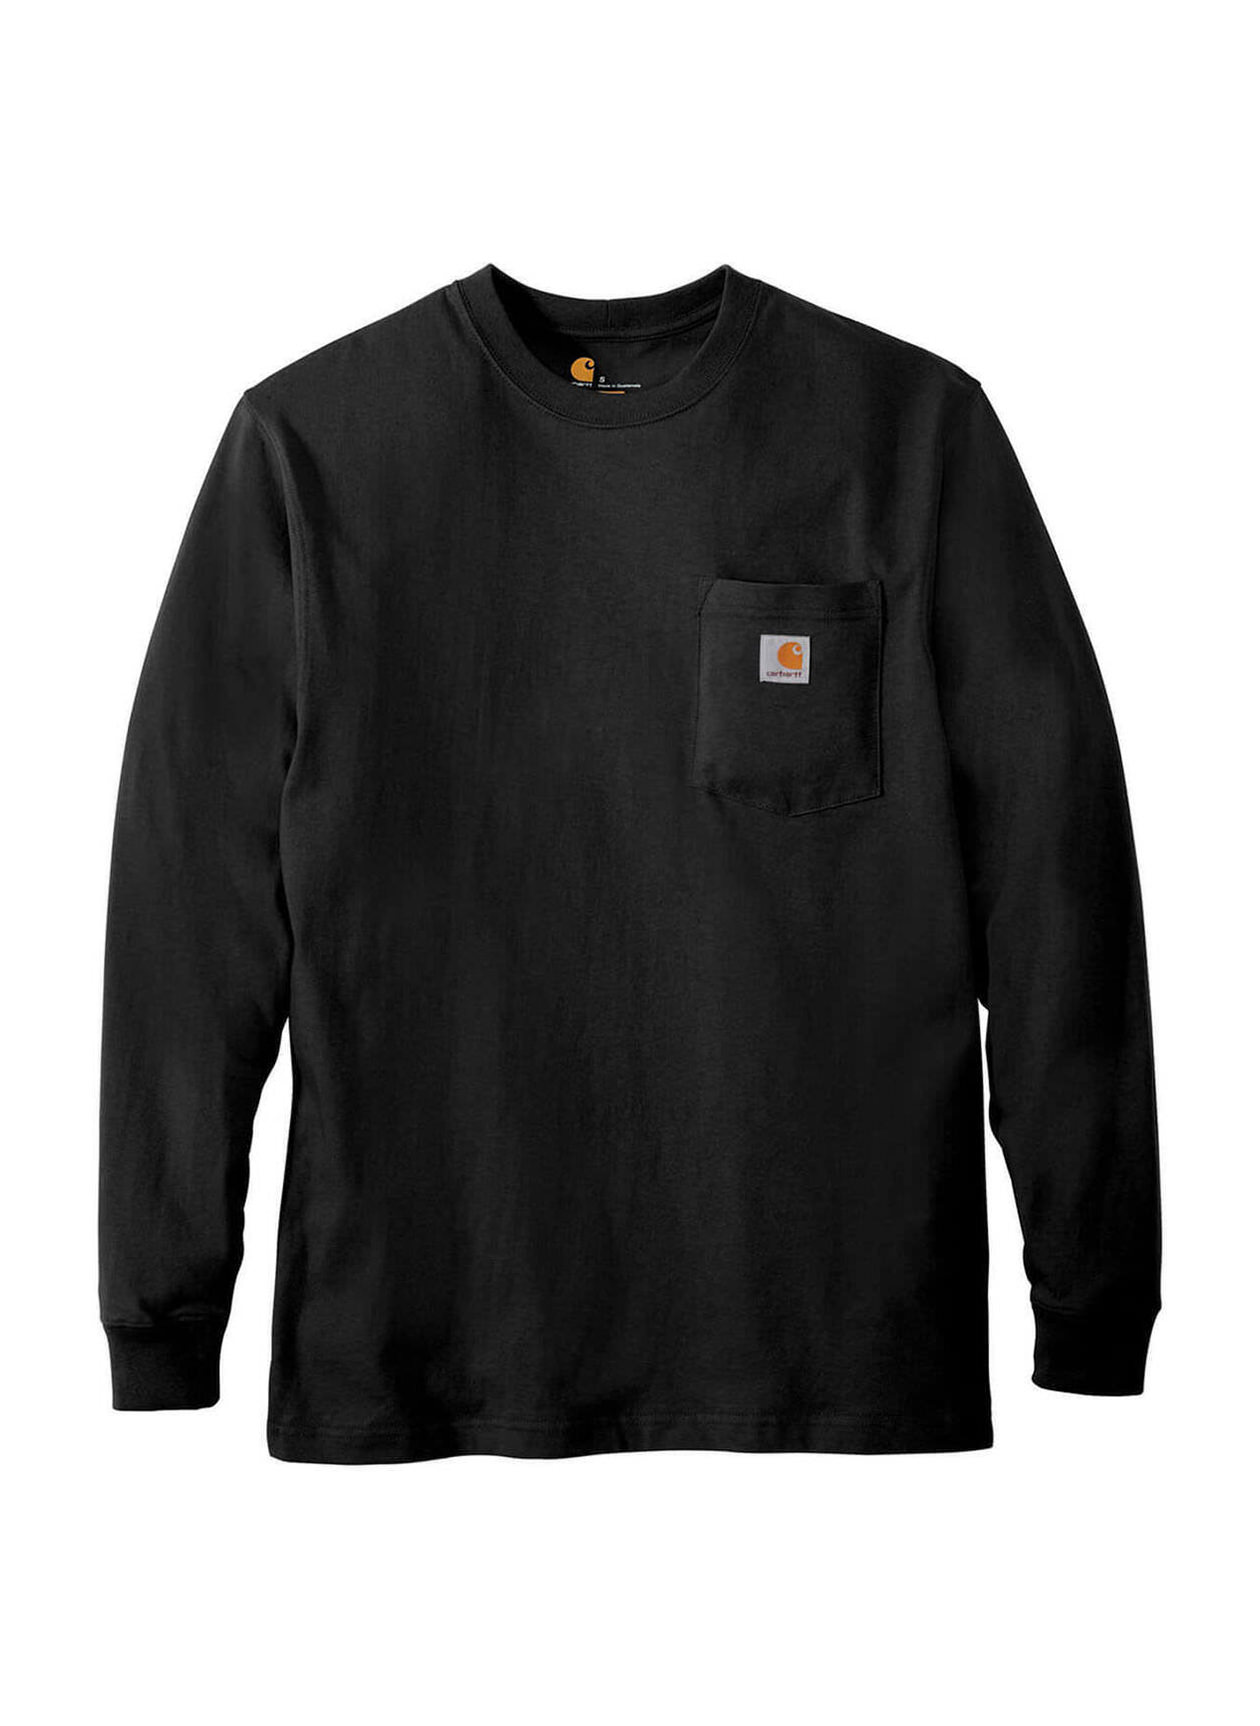 Carhartt Men's Black Workwear Pocket Long-Sleeve T-Shirt